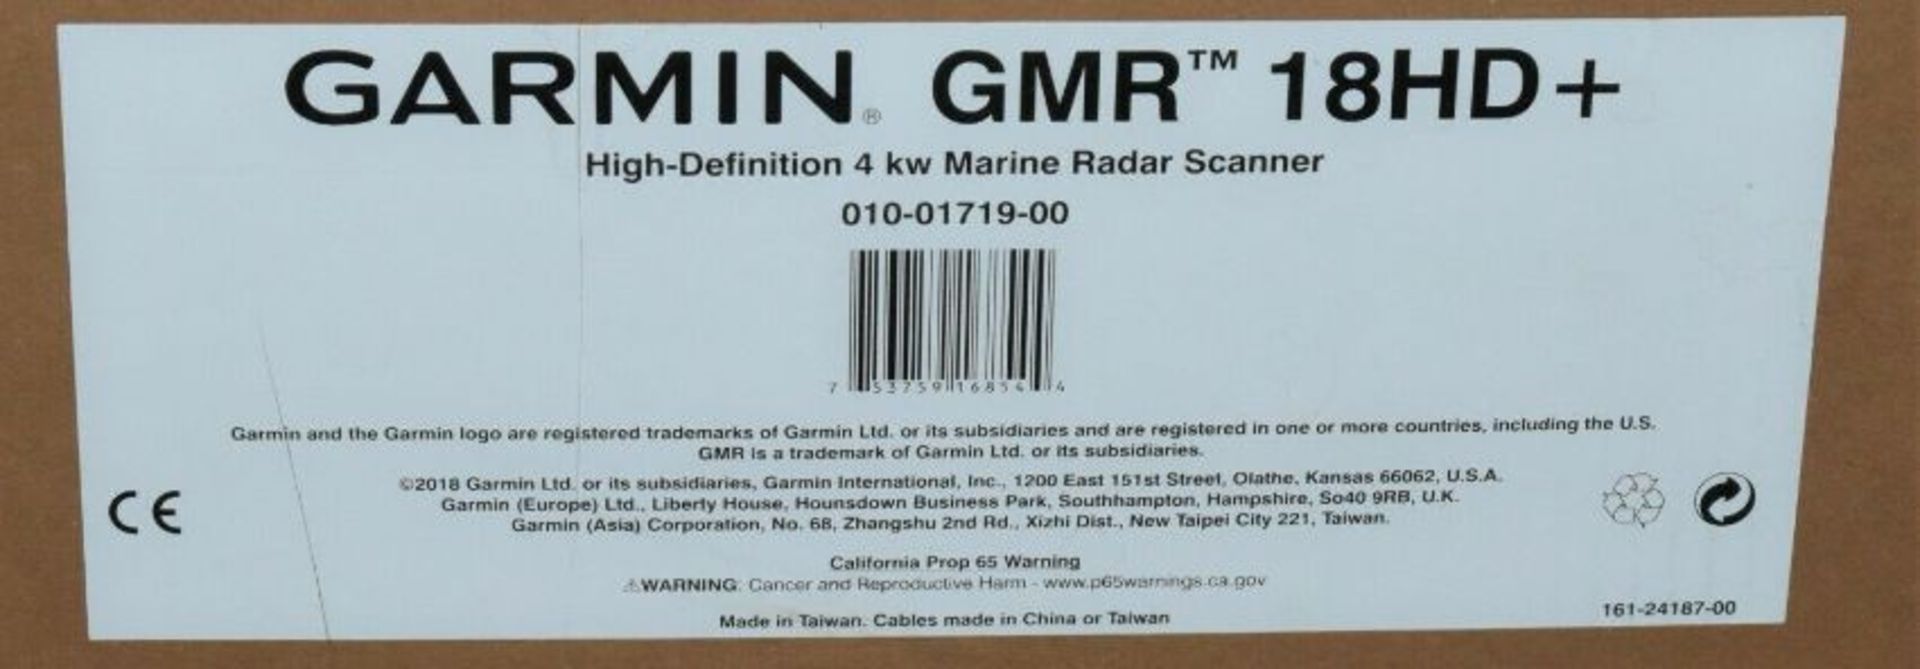 1 x Garmin GMR 18 HD+ Radome Compact Dome Dynamic Radar (18" - 4 kW) - Model Number 010-01719-00 - - Image 2 of 5